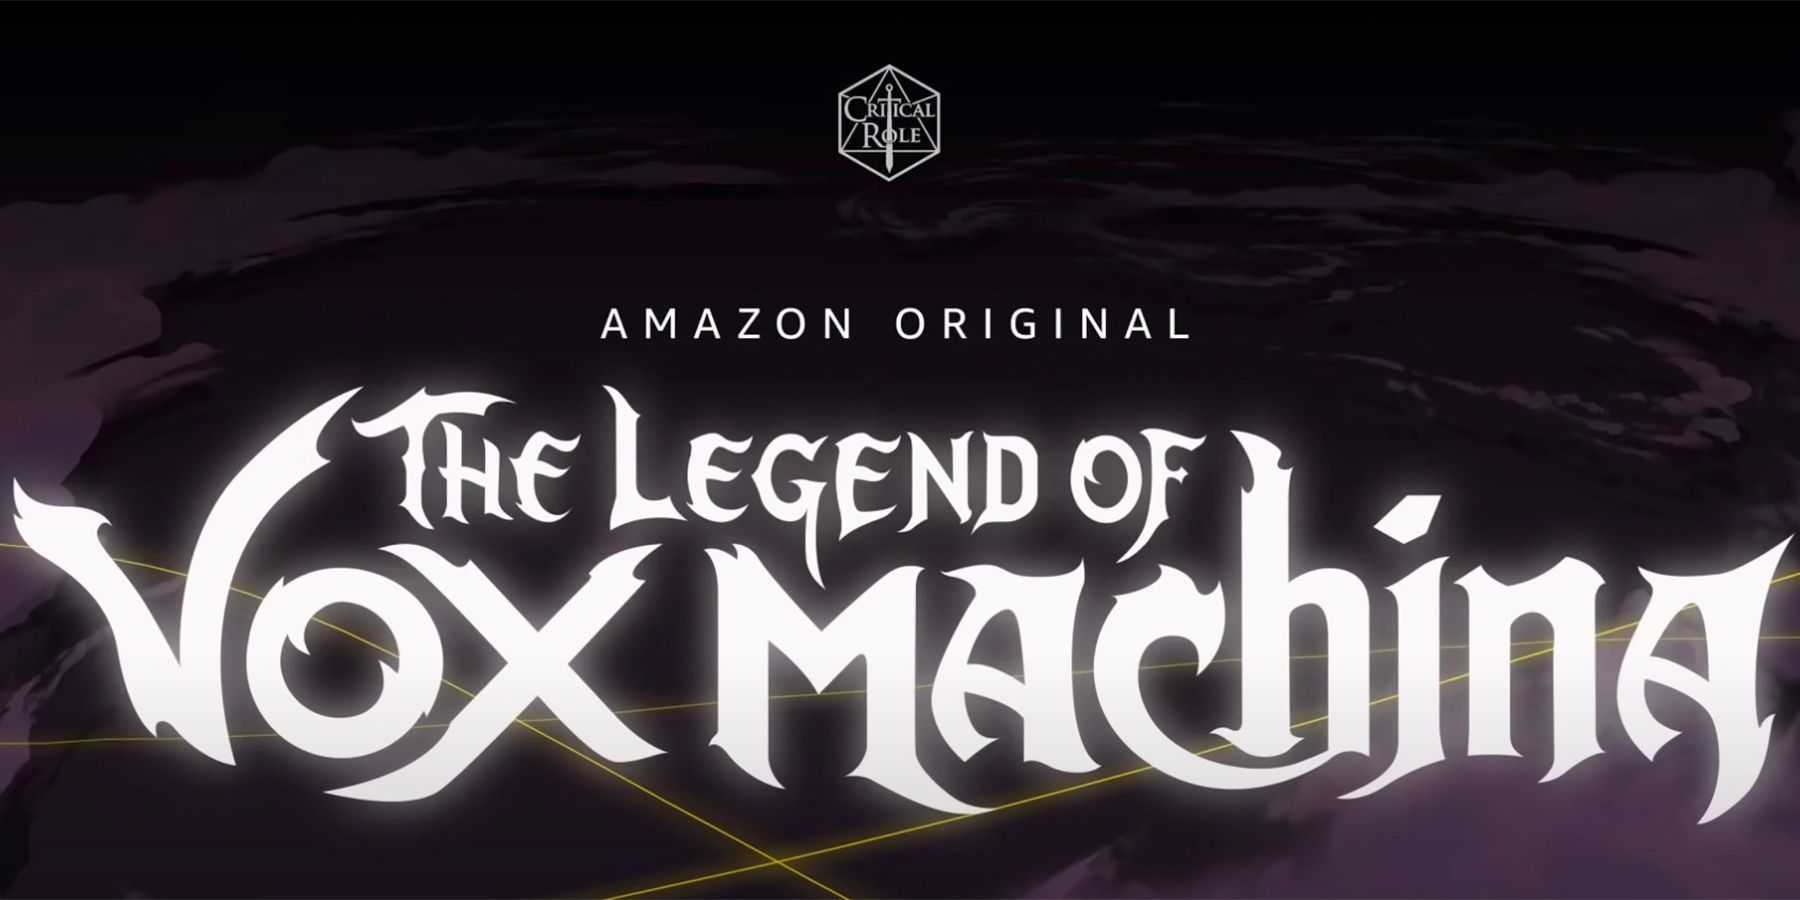 The Legend of Vox Machina Season 2 Trailer 